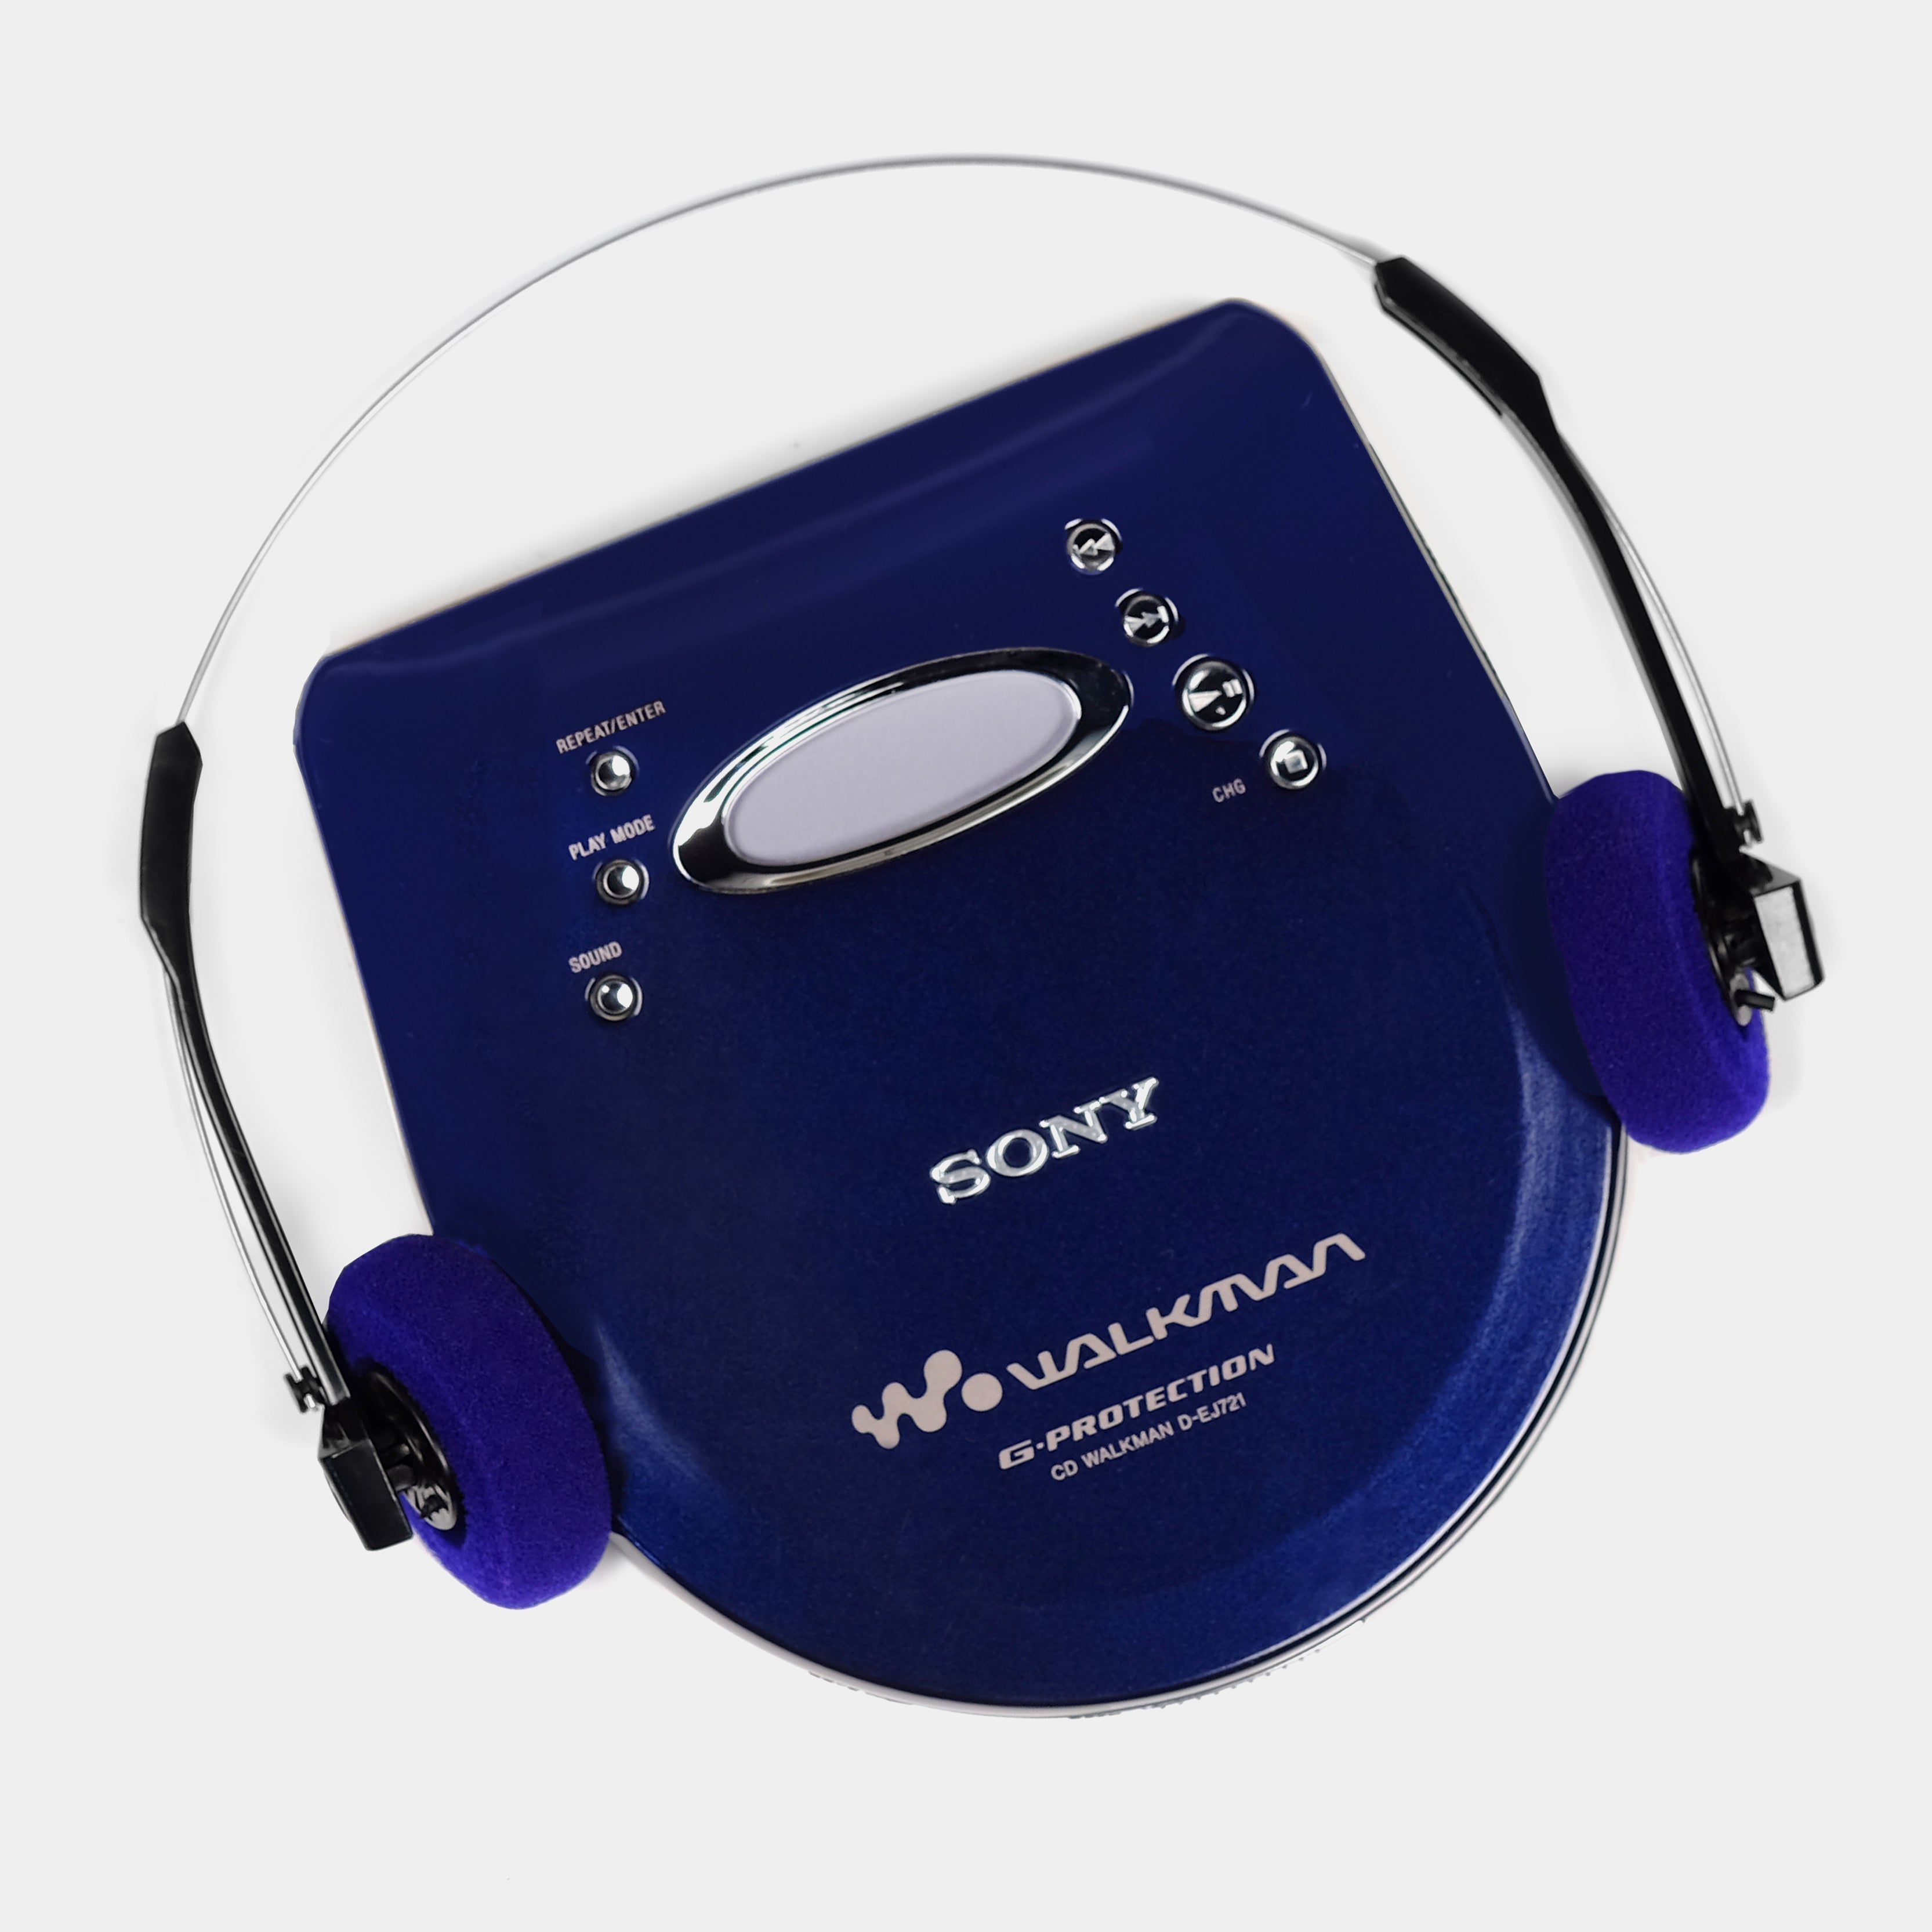 Sony Walkman D-EJ721 Portable CD Player